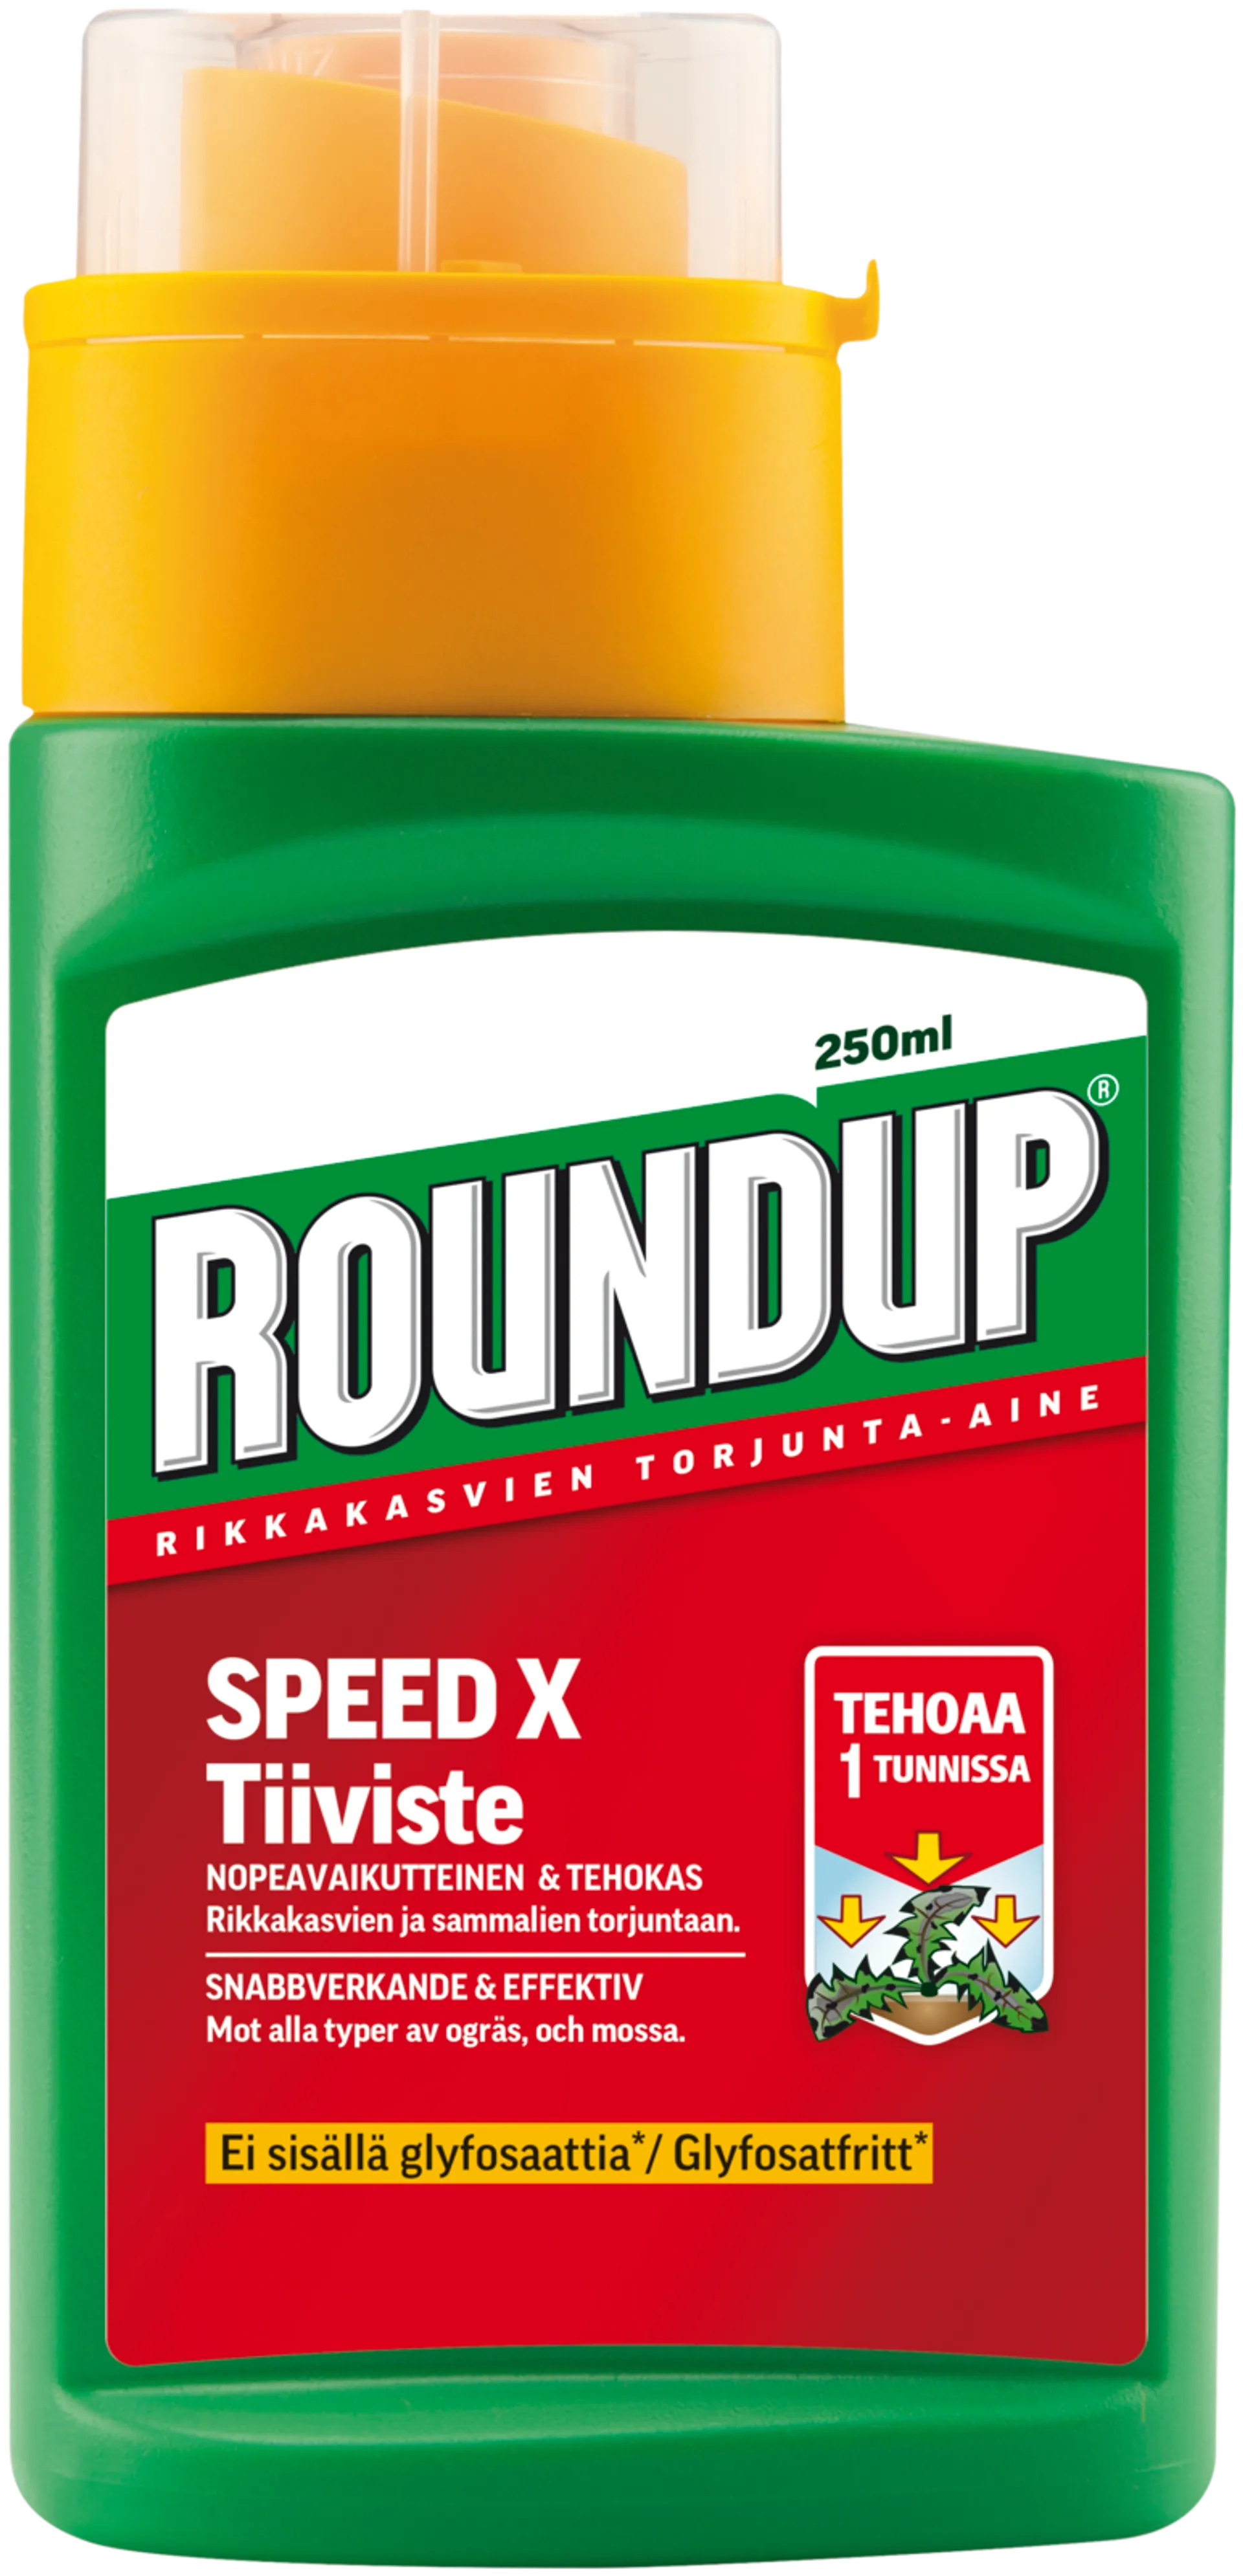 RoundUp Speed X 250 ml Rikkakasvien torjunta-aine